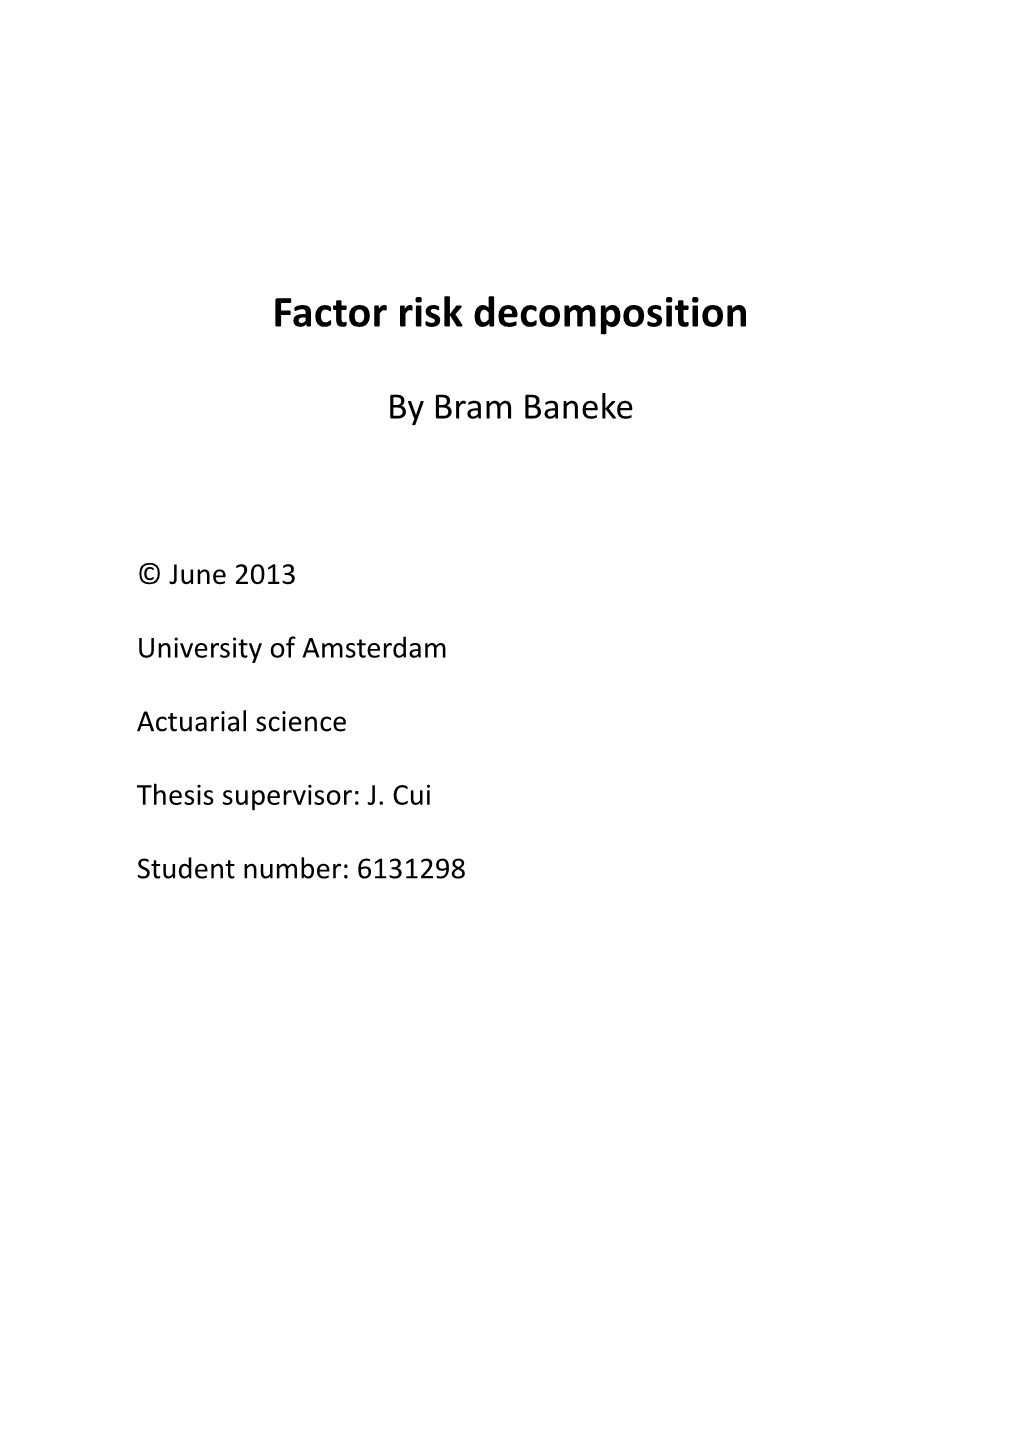 Factor Risk Decomposition